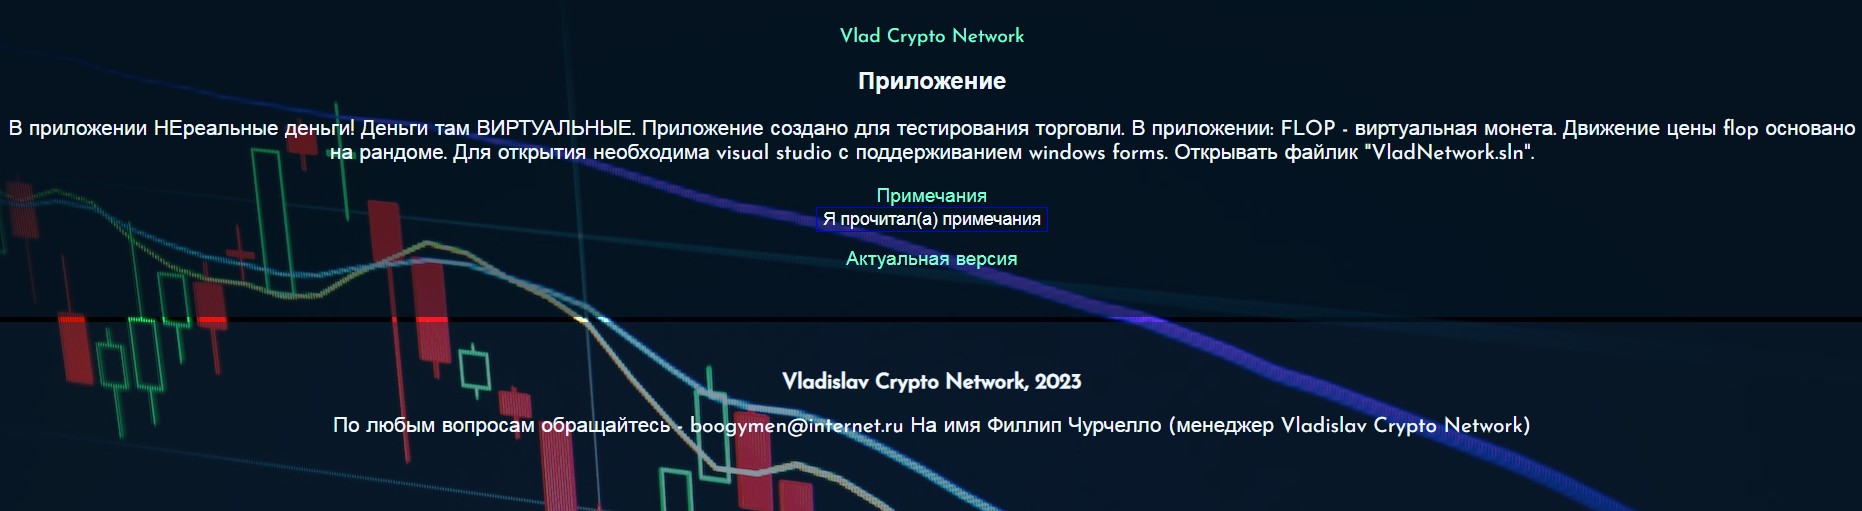 vladislav crypto network